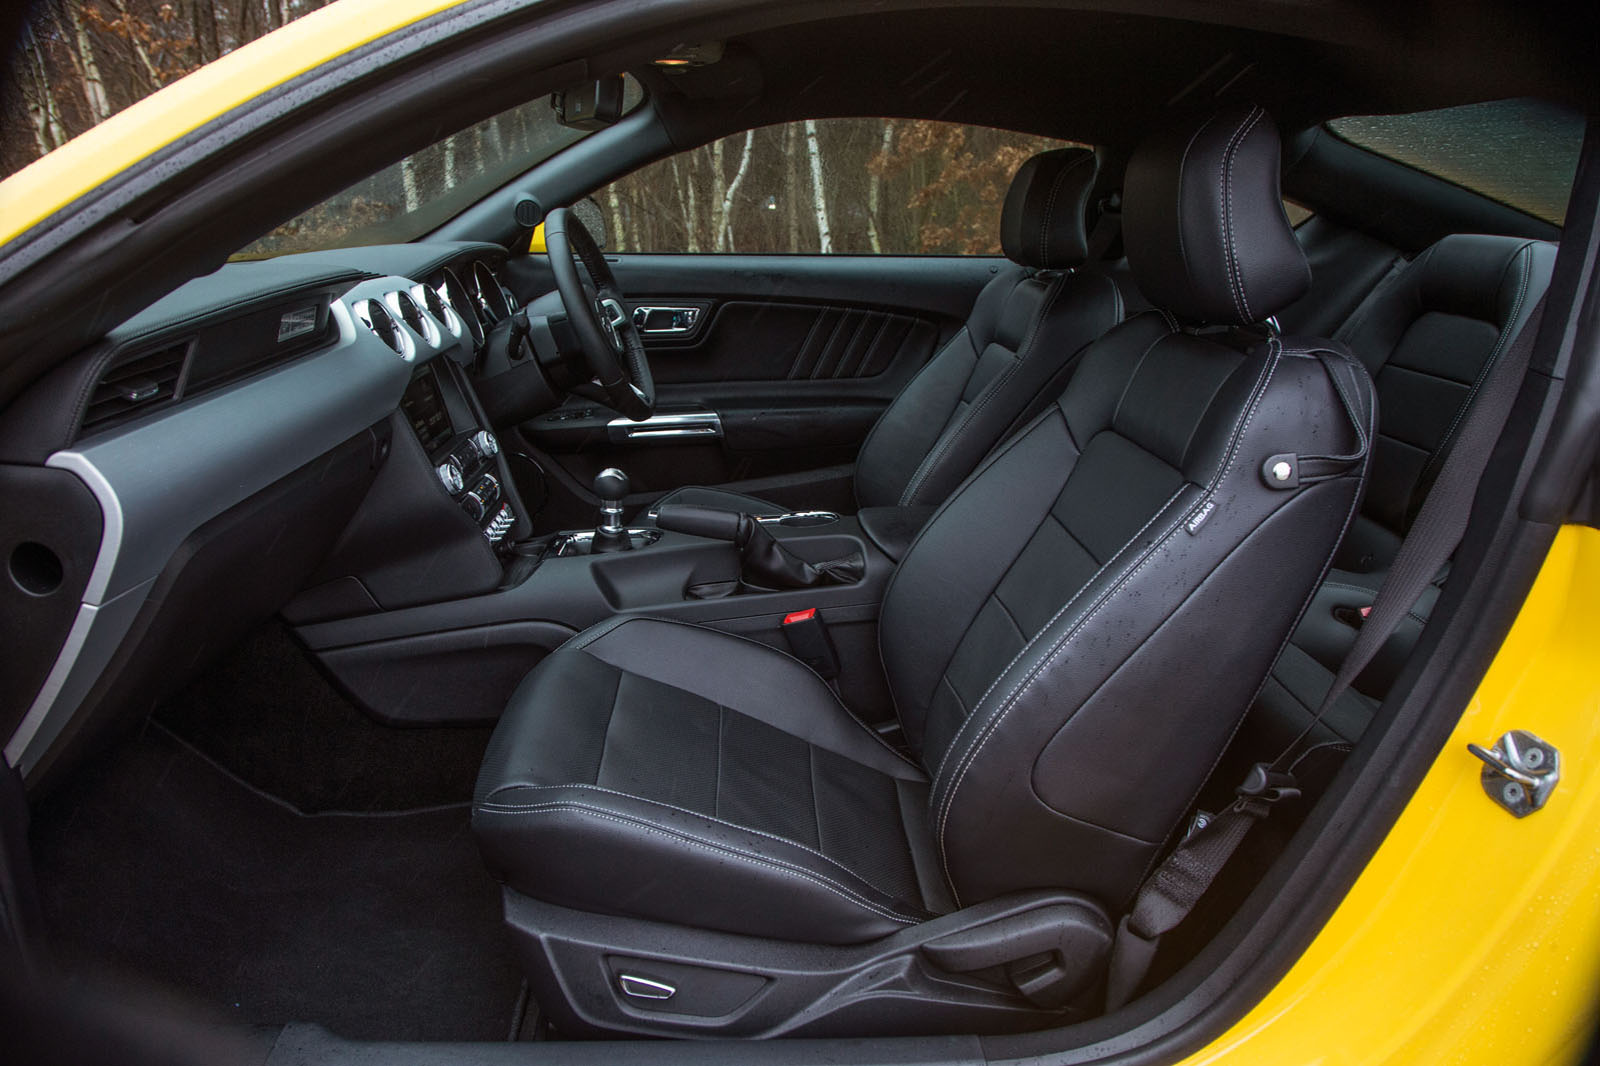 Ford Mustang interior